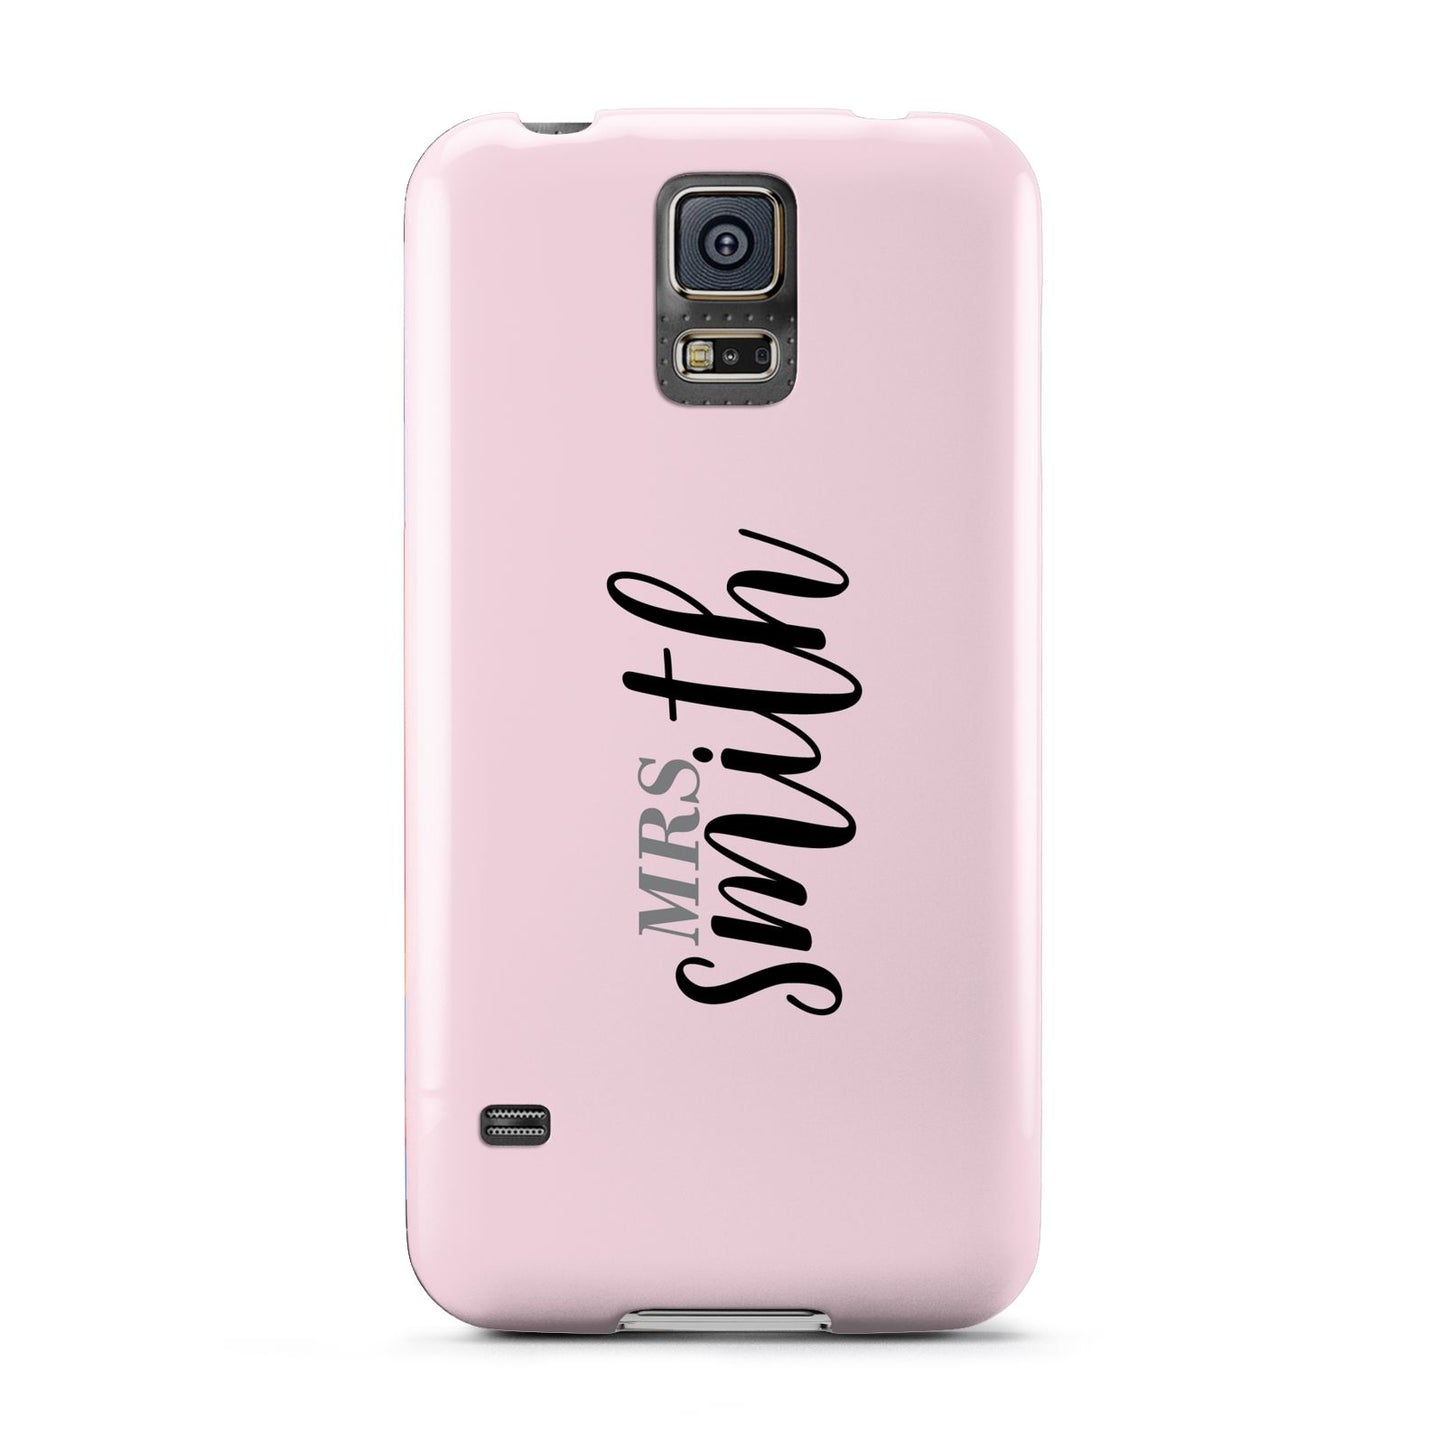 Personalised Bridal Samsung Galaxy S5 Case